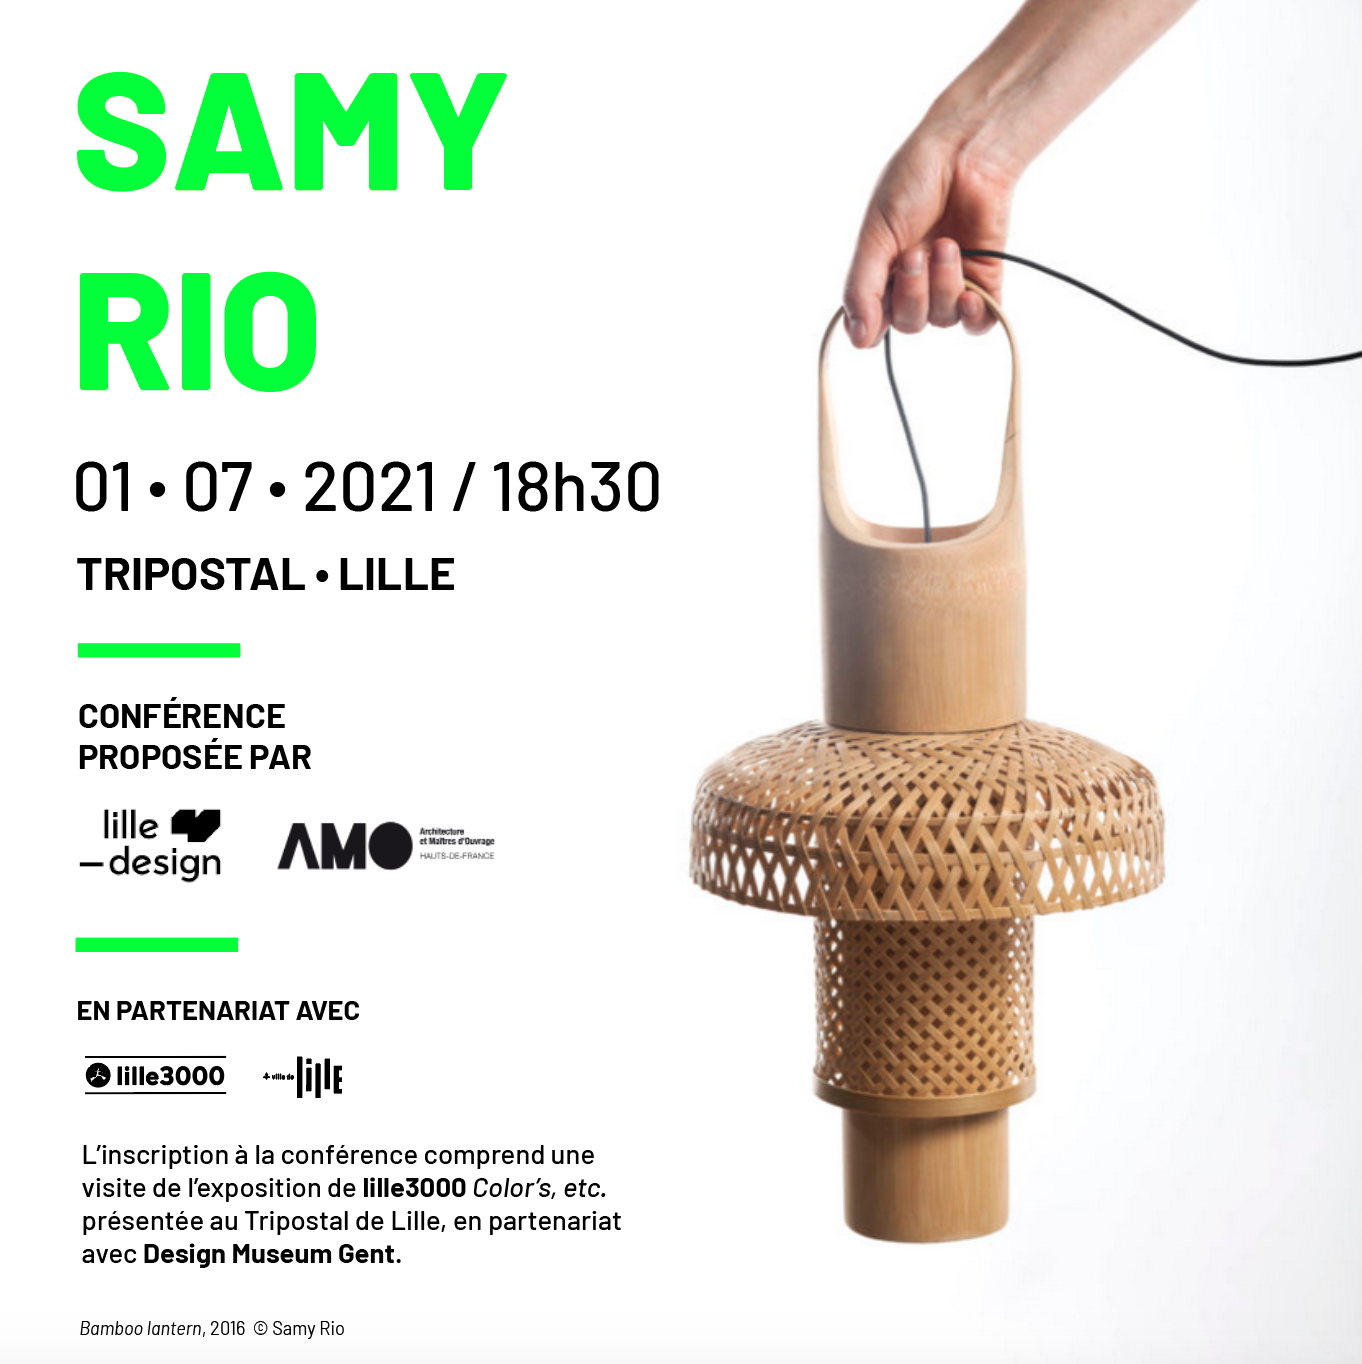 Grande Leçon de Design by Samy Rio